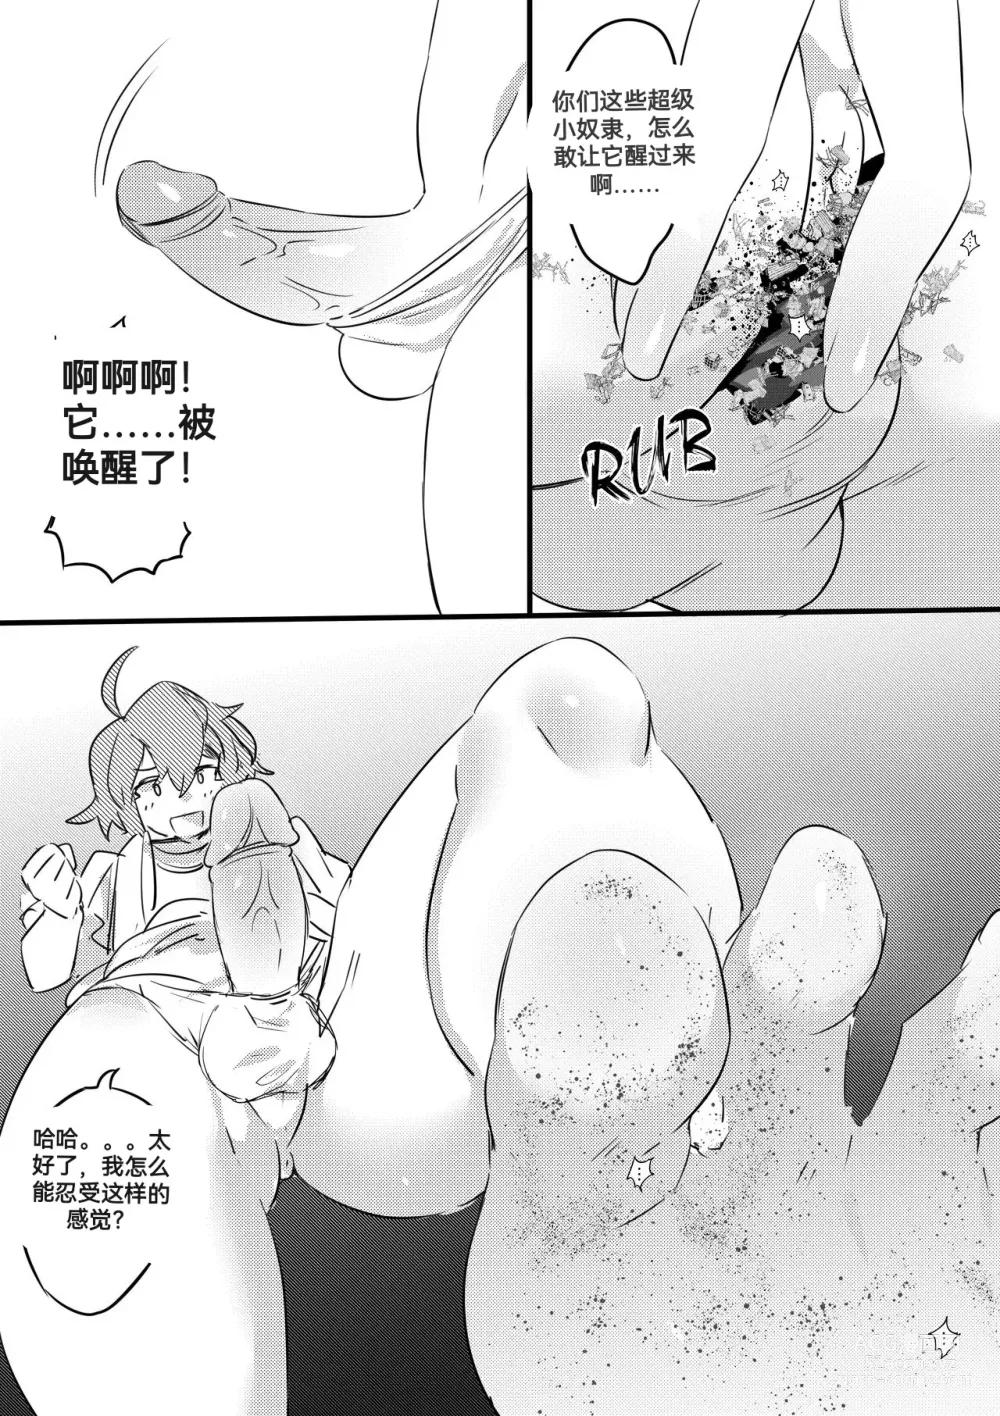 Page 13 of manga 自我翻译（五）gw论坛转载，落叶秋风